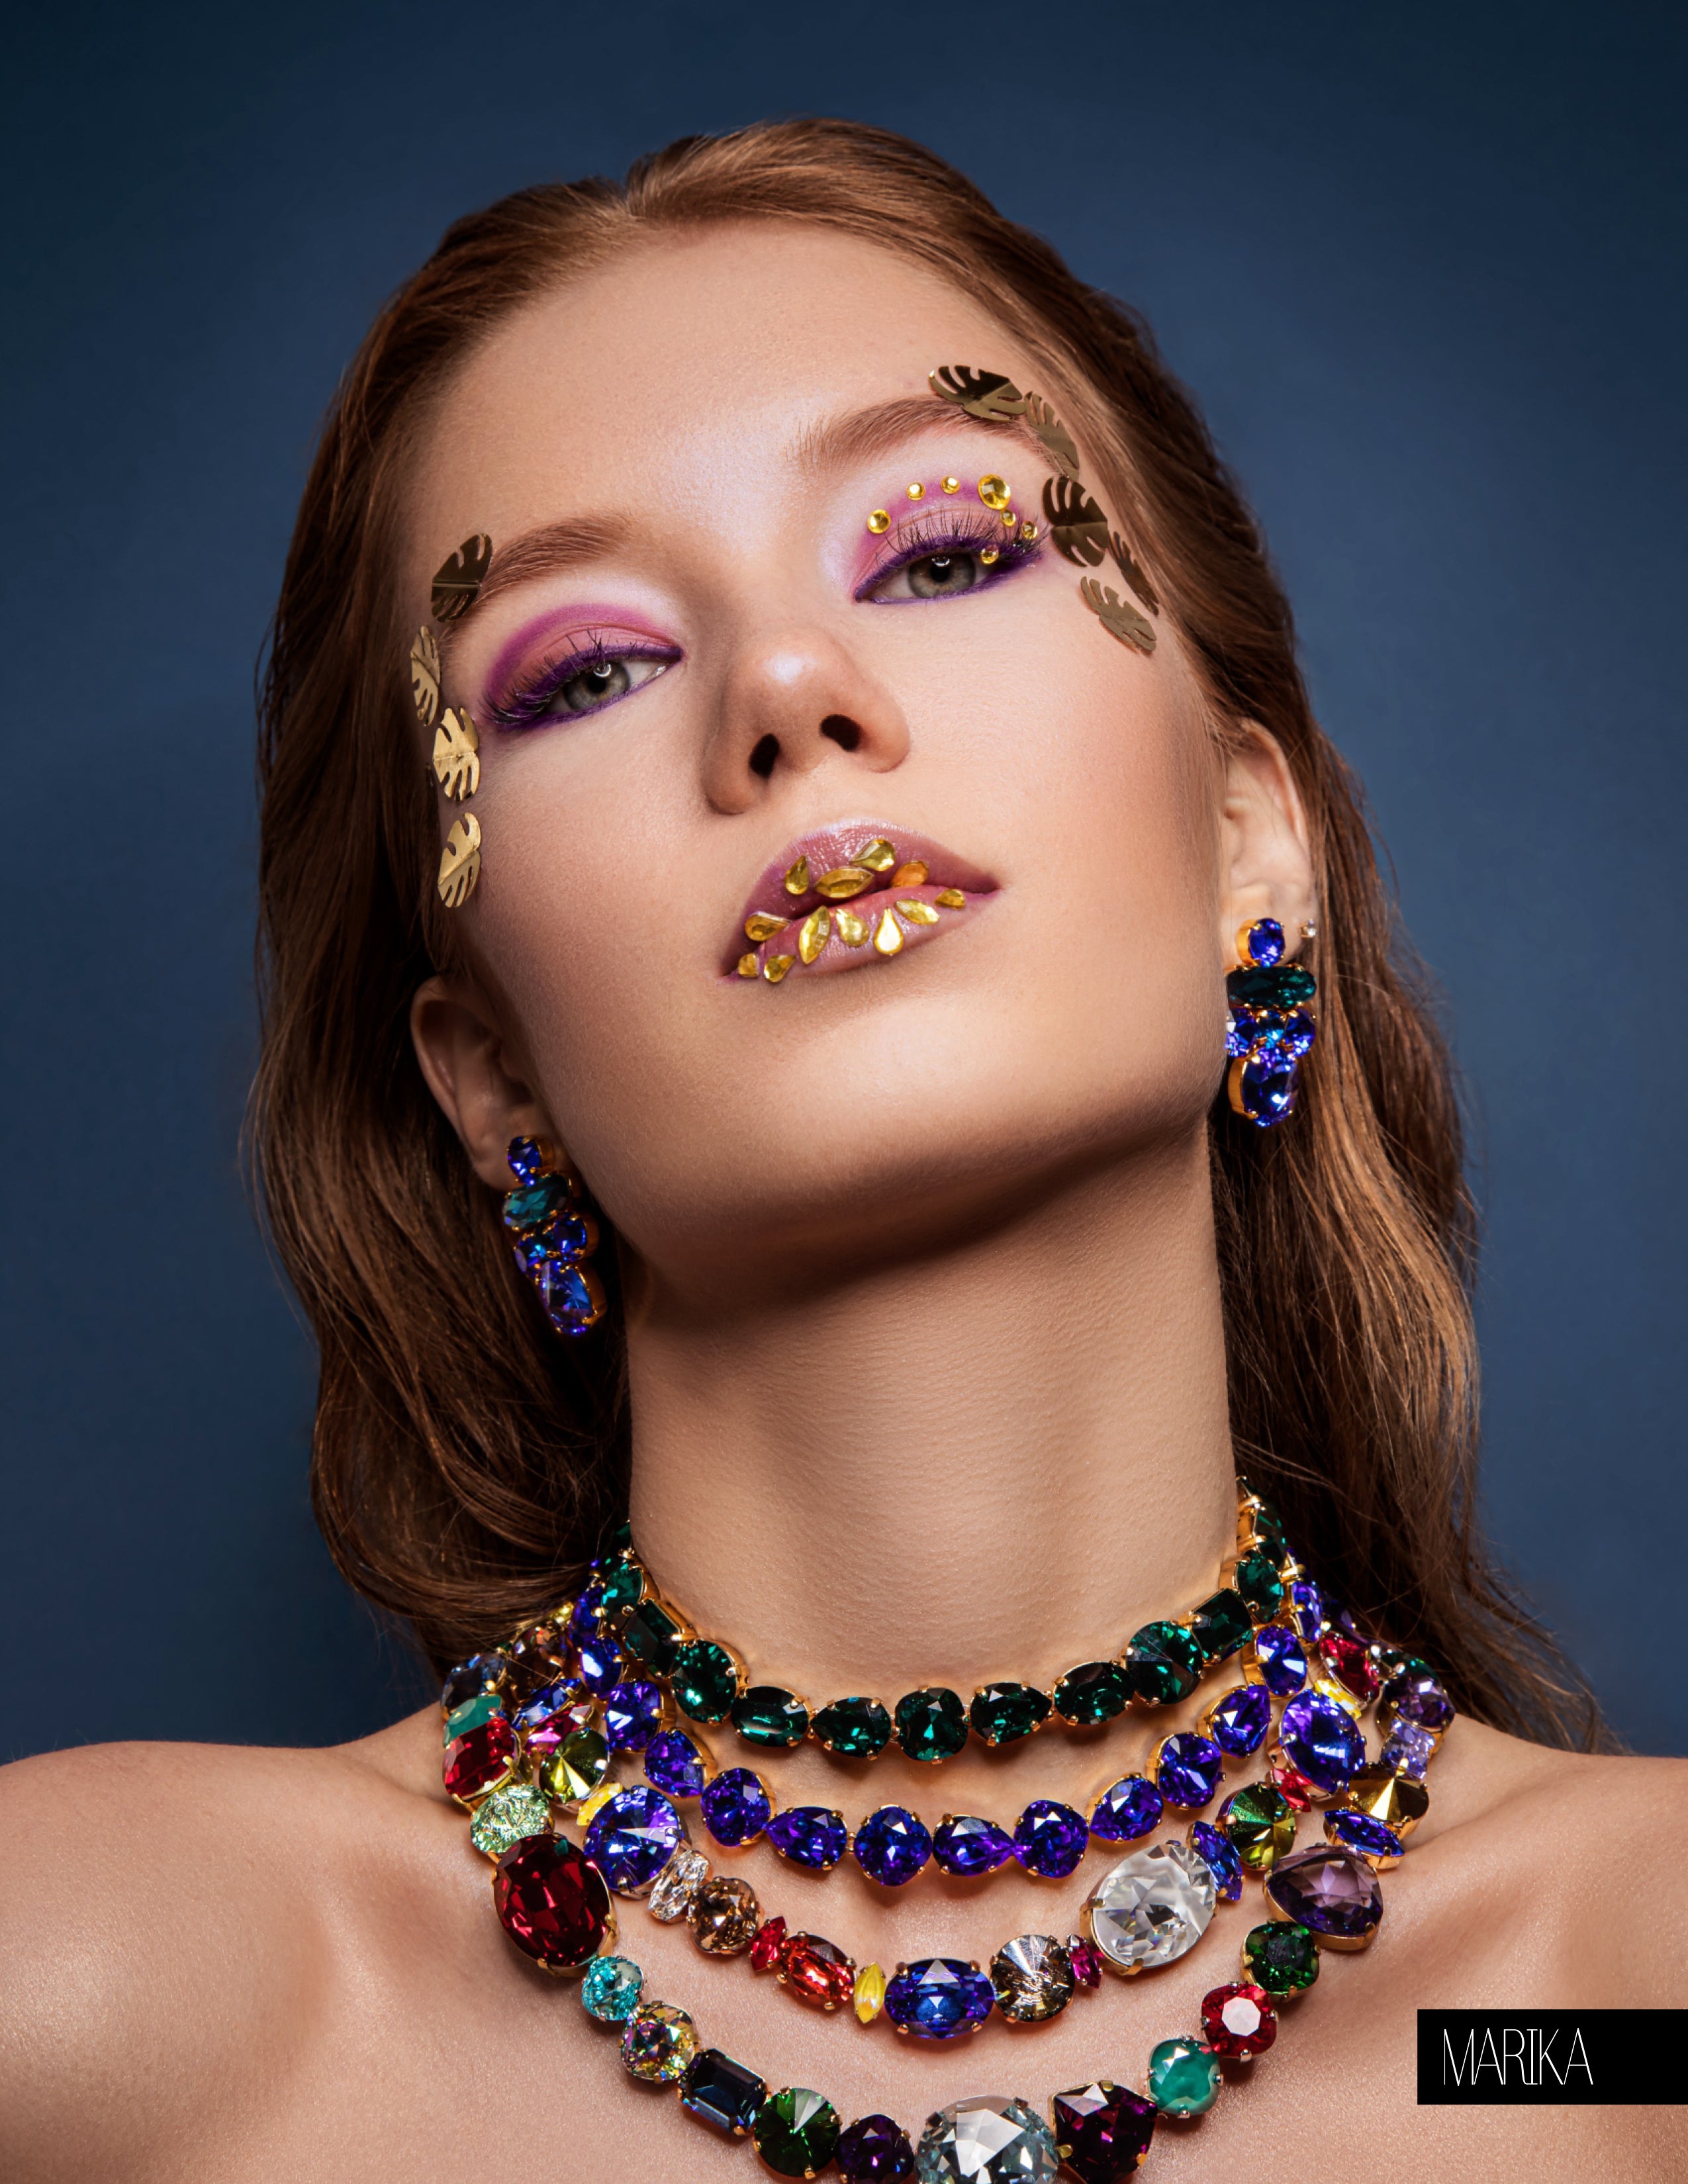 SILDARE_jewelry_Crystal-statement-coloreded-necklace-jewelry-luxury-handmade-unique-ootd-gold-plated-earrings-bracelet-marikamagazine-newyork-france-paris